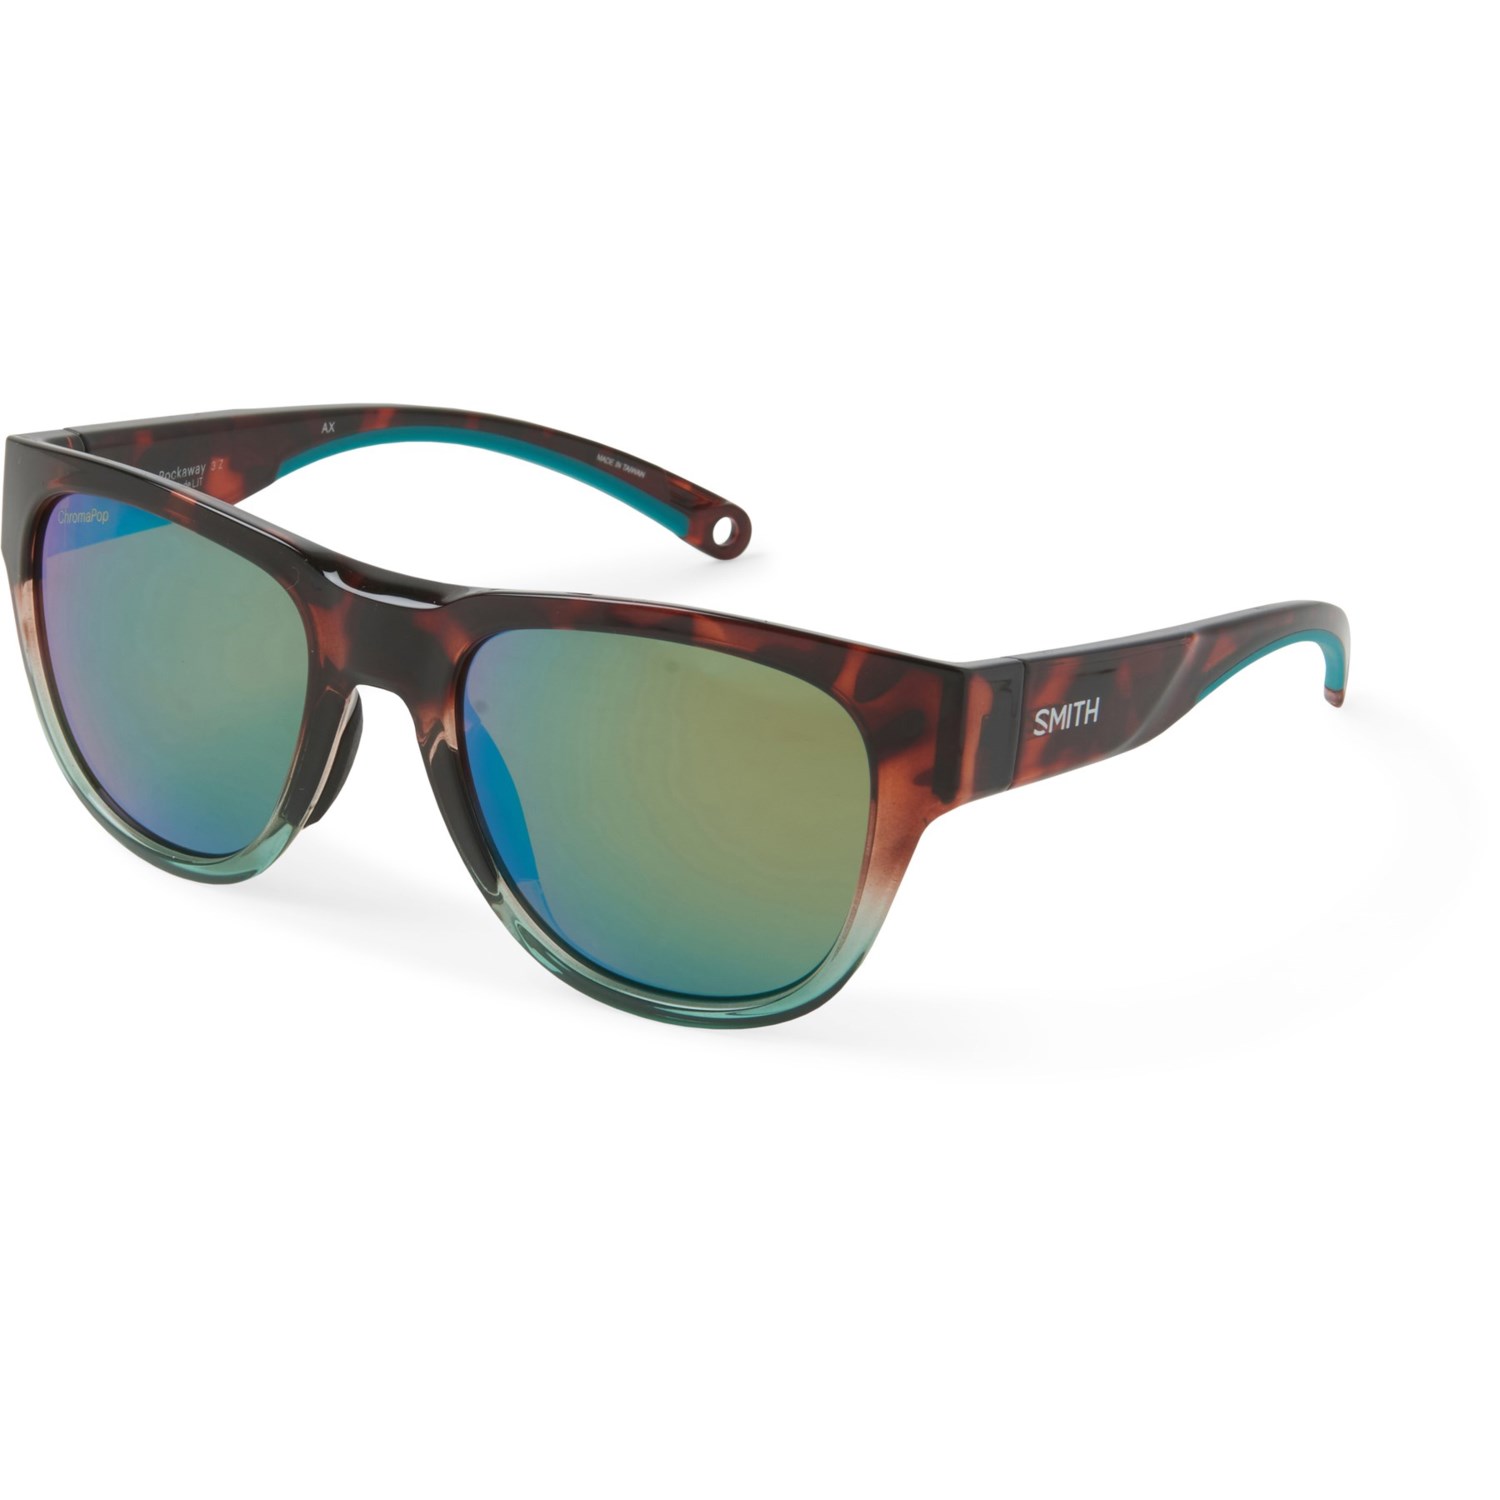 Smith Rockaway Sunglasses (For Women) - Save 54%